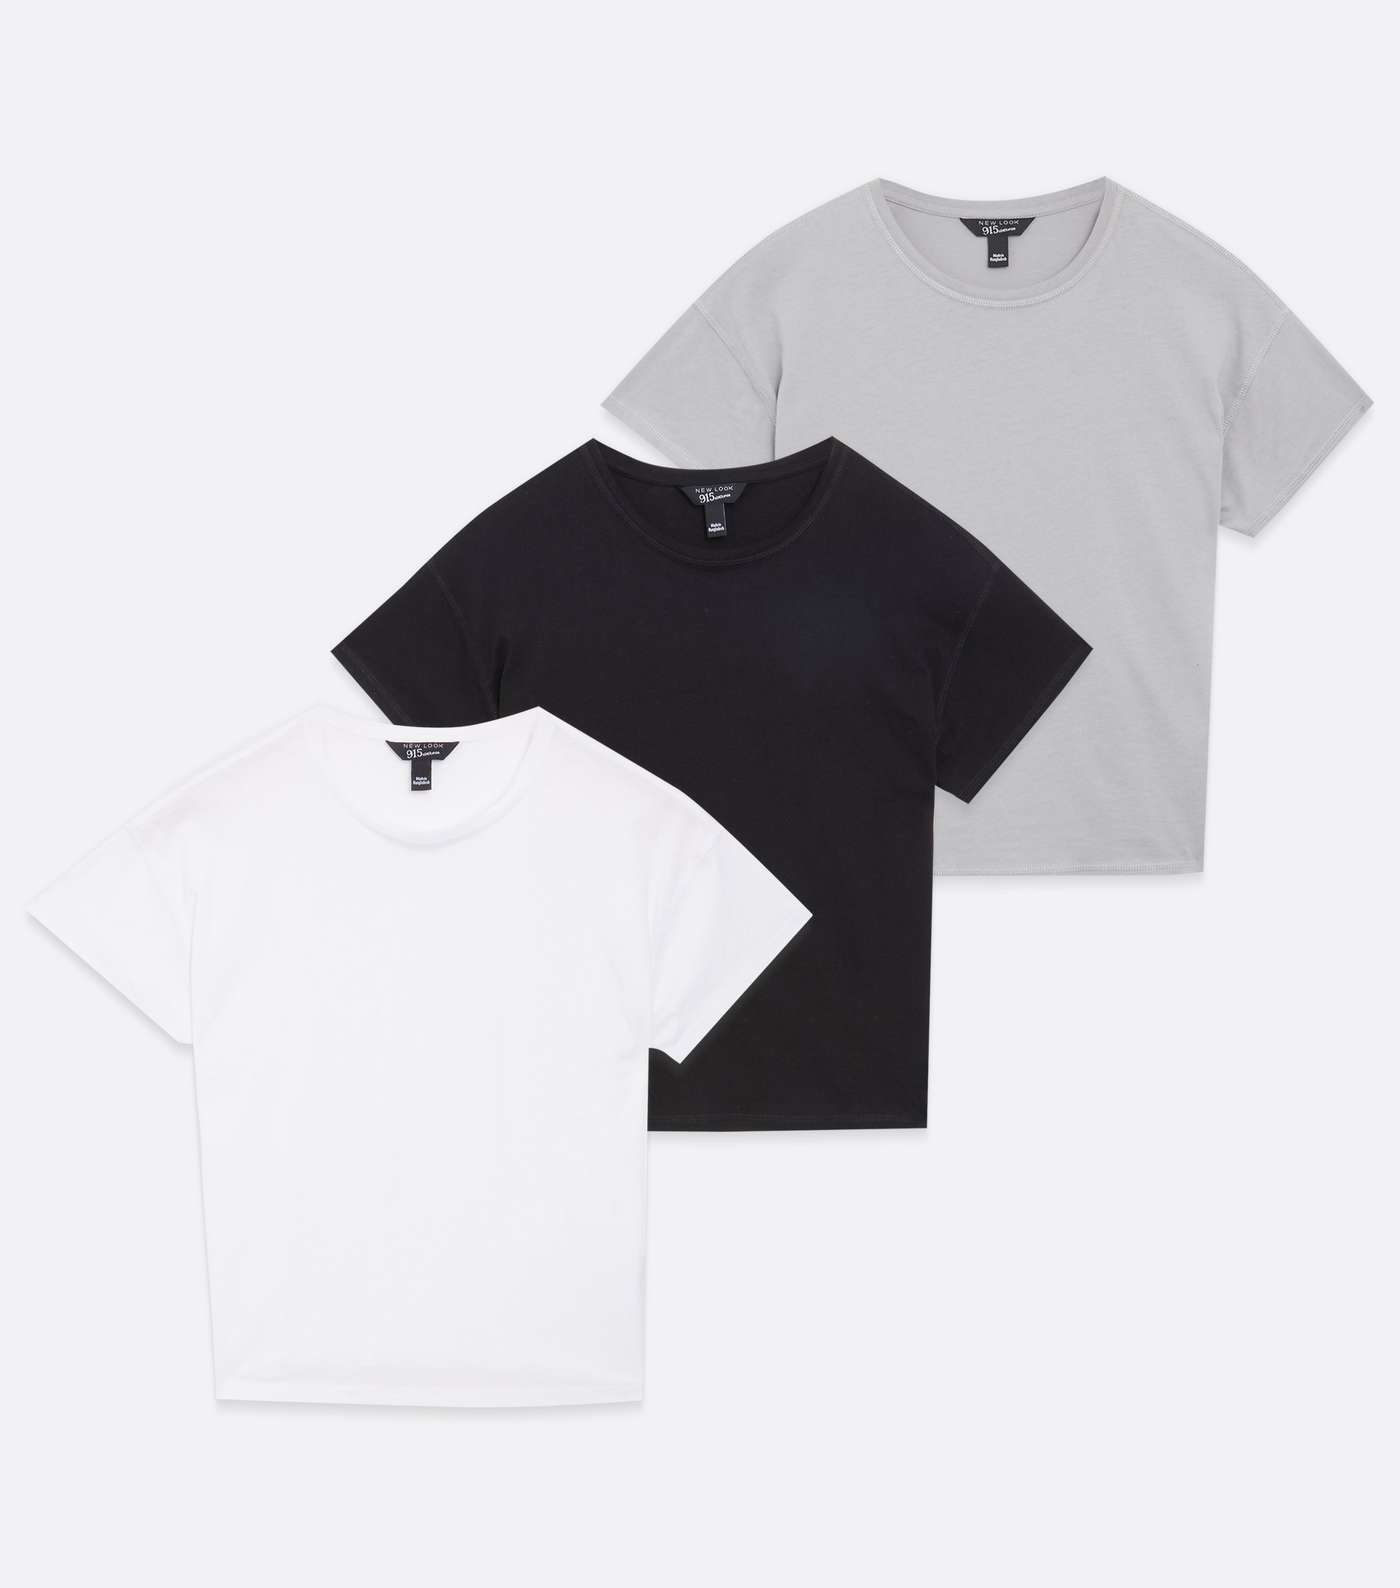 Girls 3 Pack Grey Black and White Crew T-Shirts Image 5